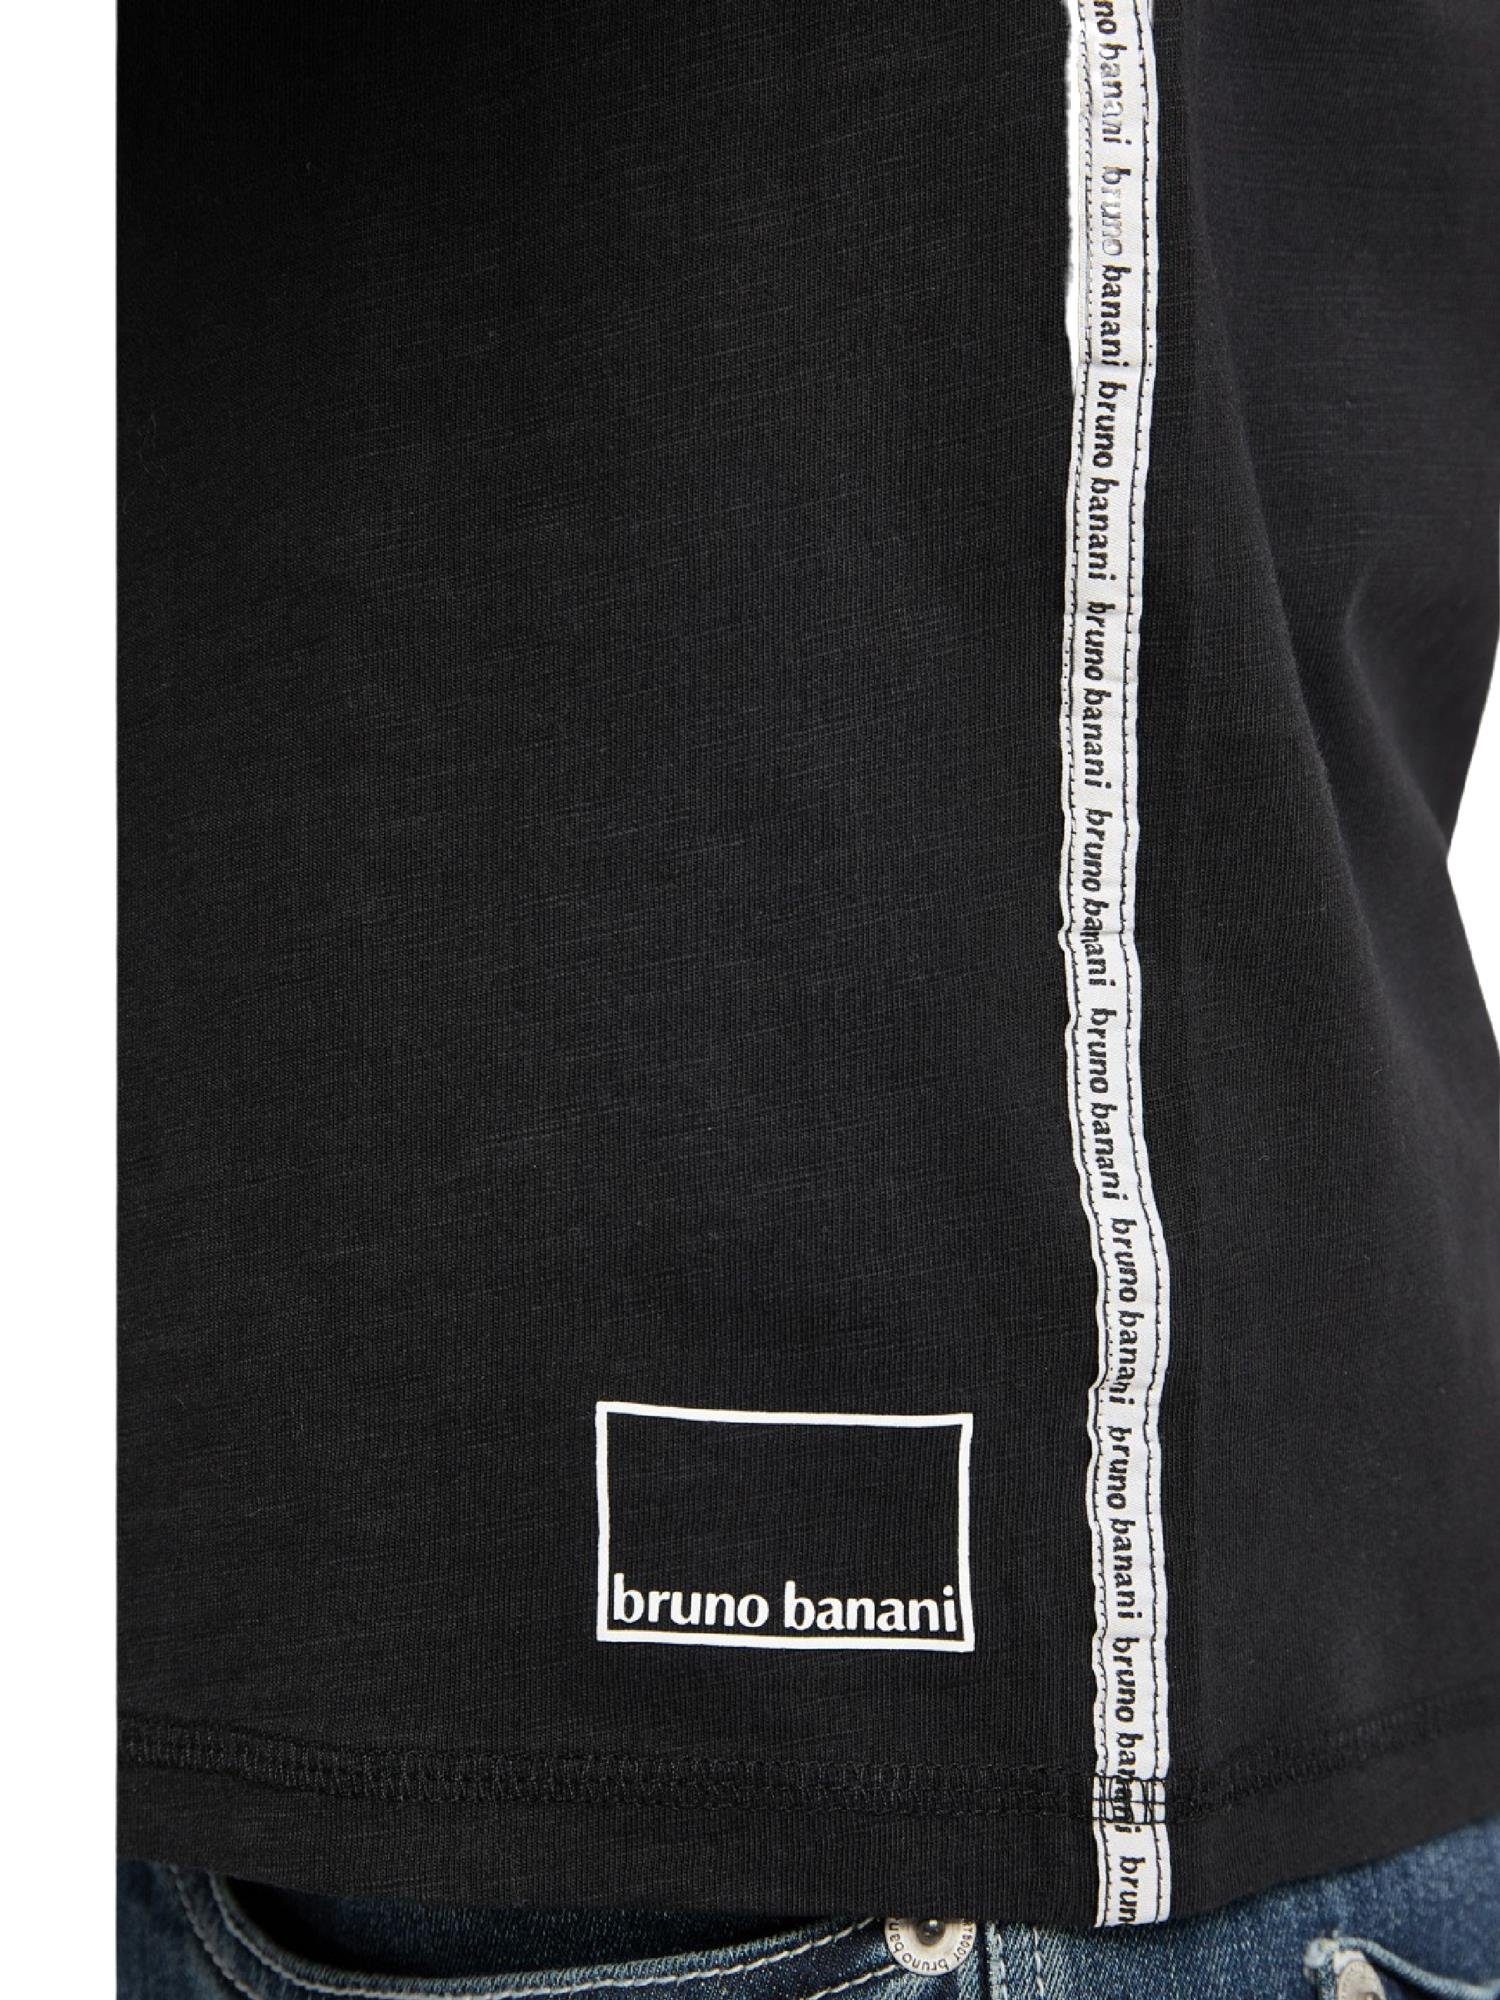 Banani Bruno HAMILTON Schwarz T-Shirt